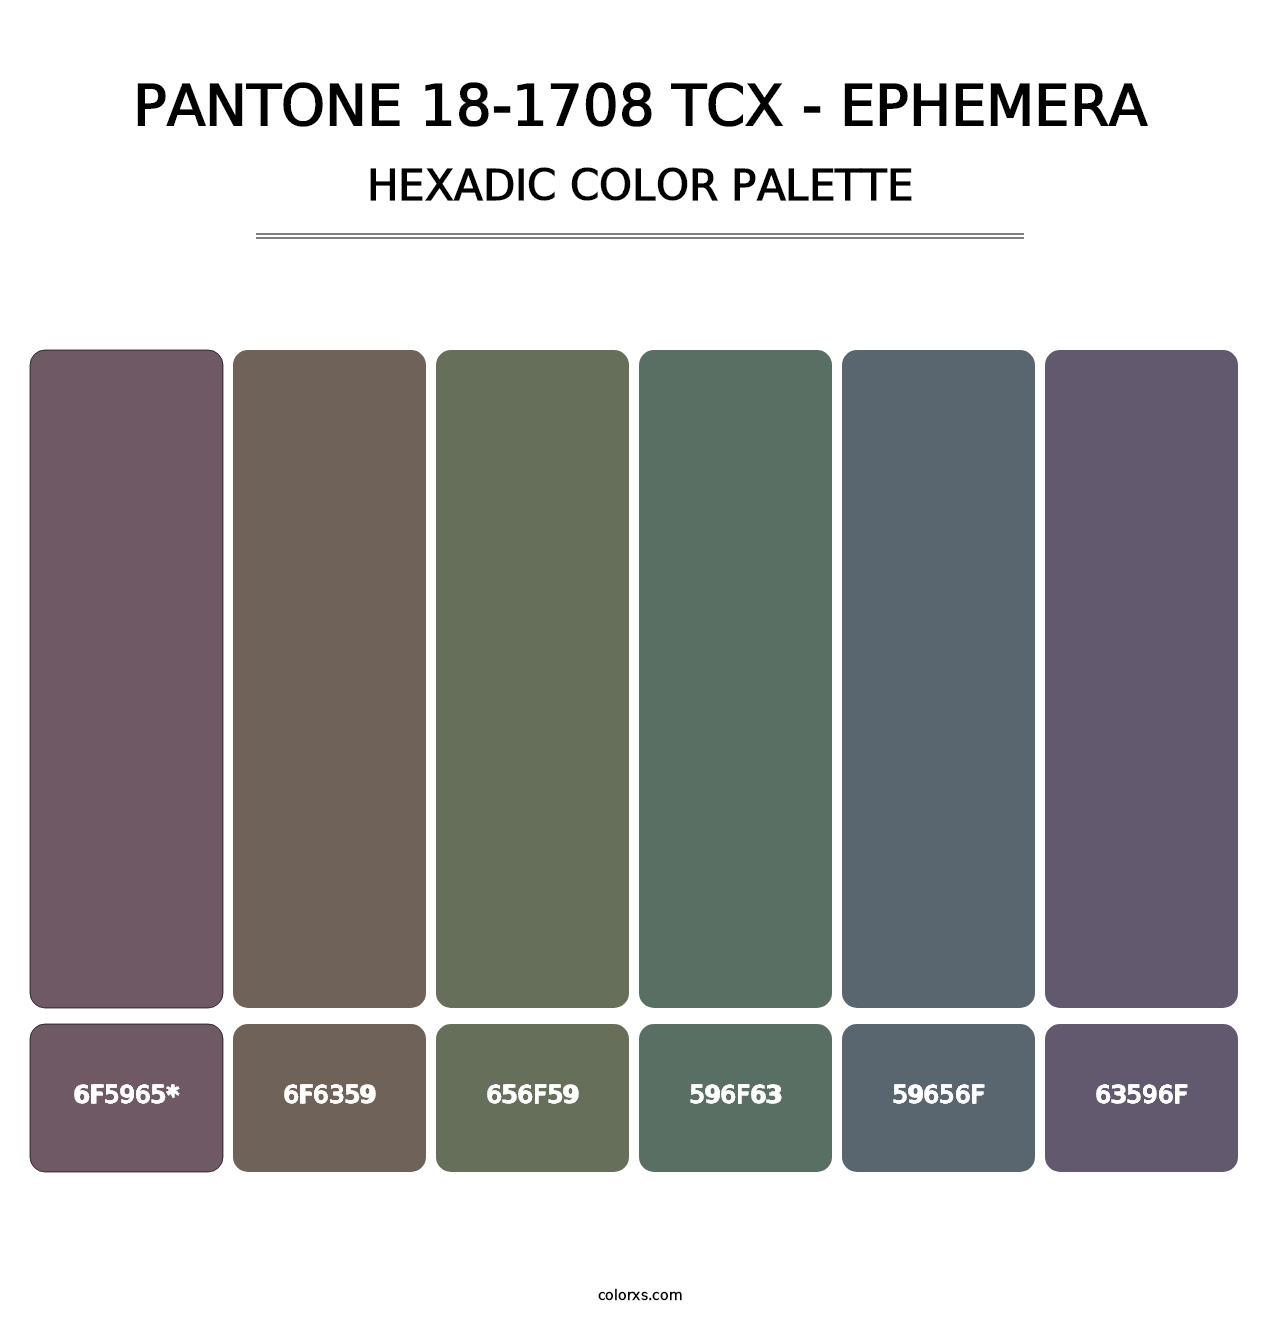 PANTONE 18-1708 TCX - Ephemera - Hexadic Color Palette